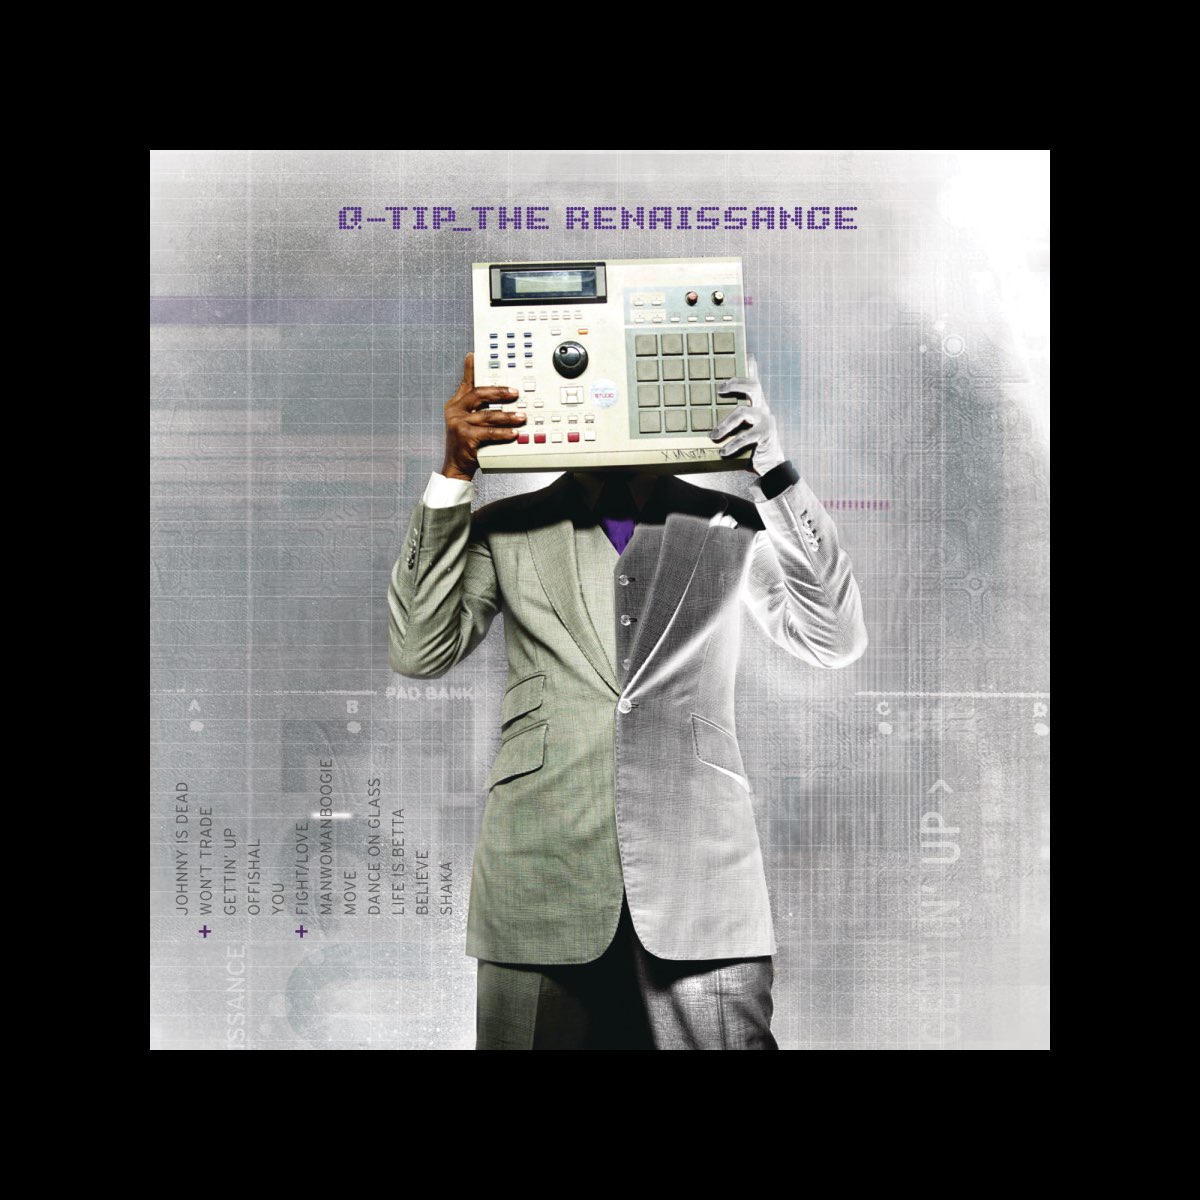 The Renaissance (Deluxe) - Album by Q-Tip - Apple Music